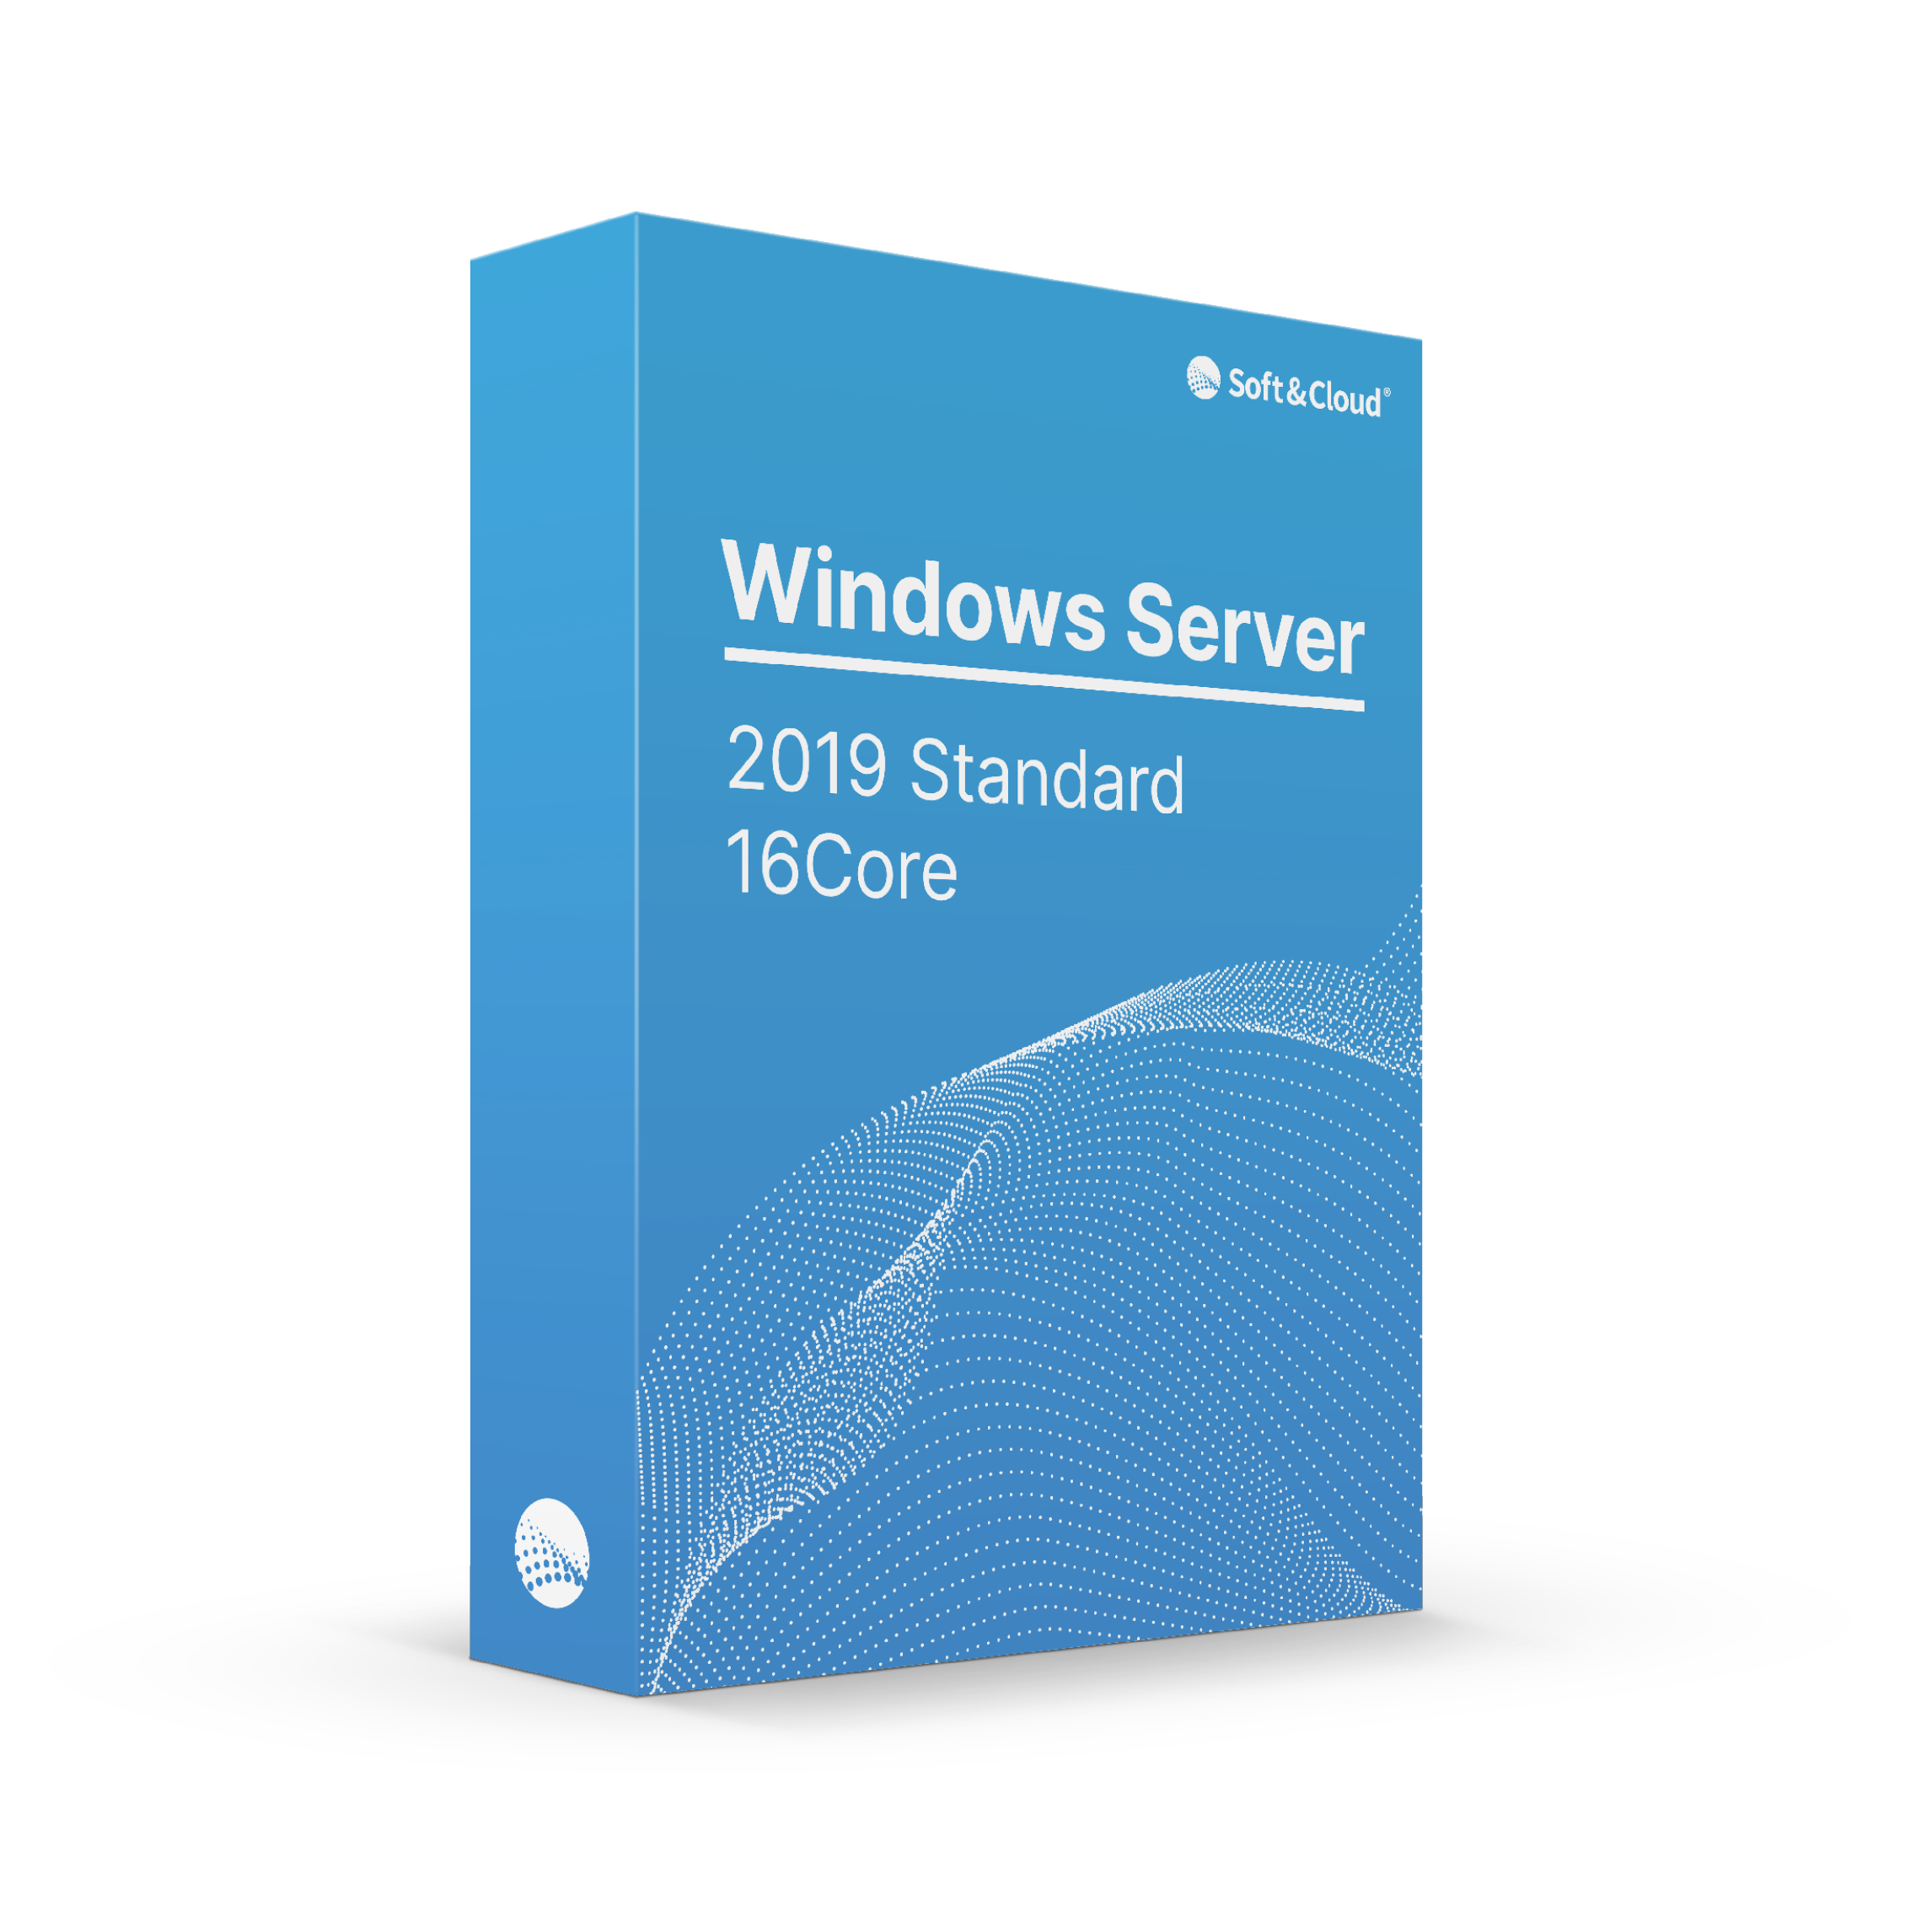 Windows Server 2019 Standard 16Core